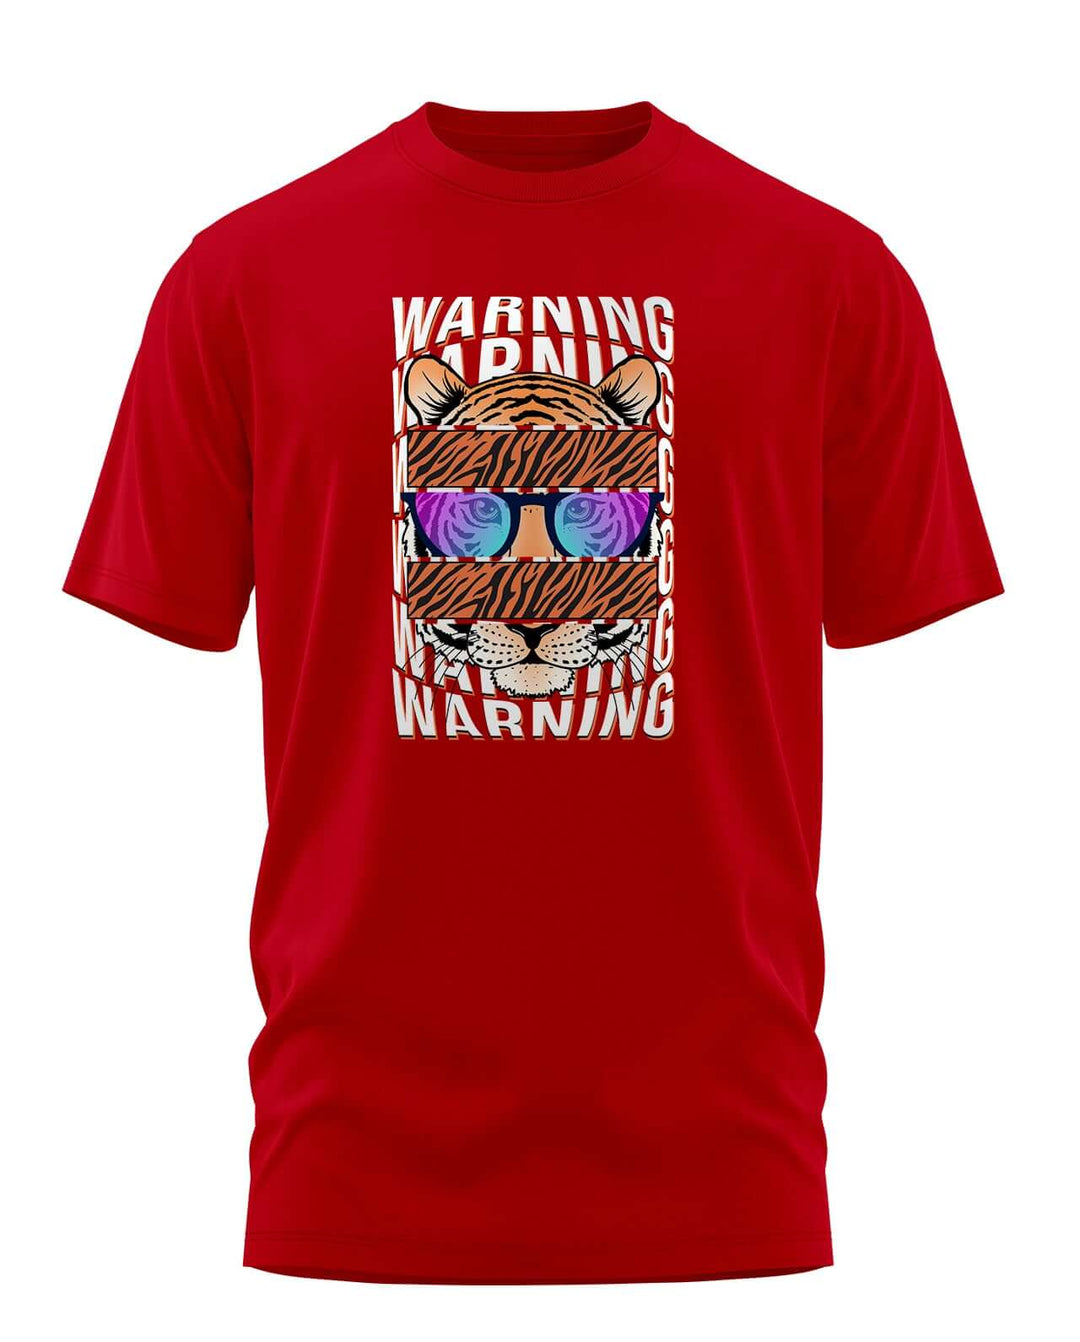 Tiger's warning T-shirt